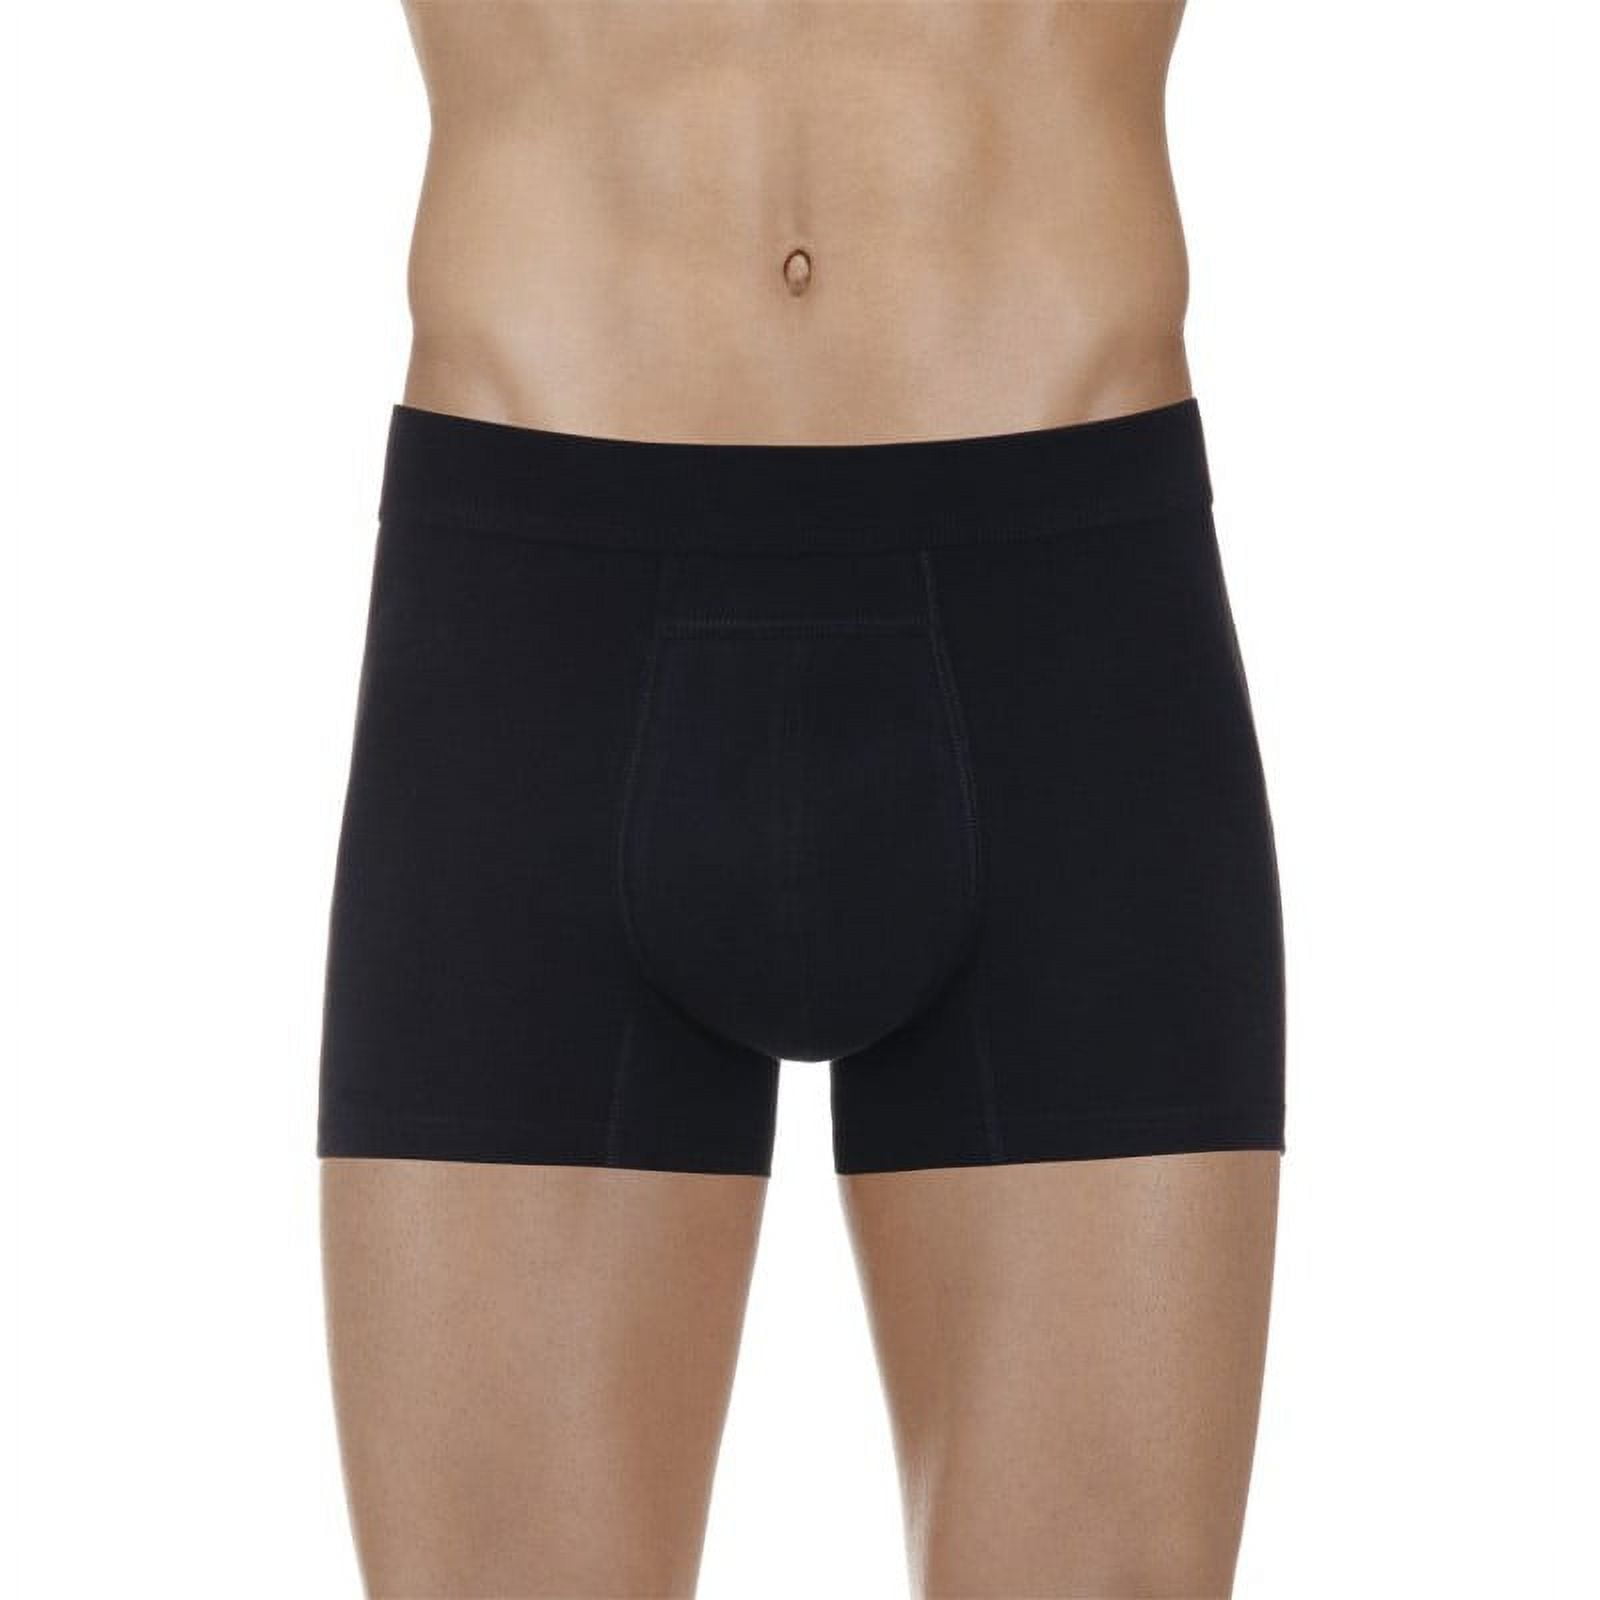  Petey's Washable Incontinence Underwear for Men (Super